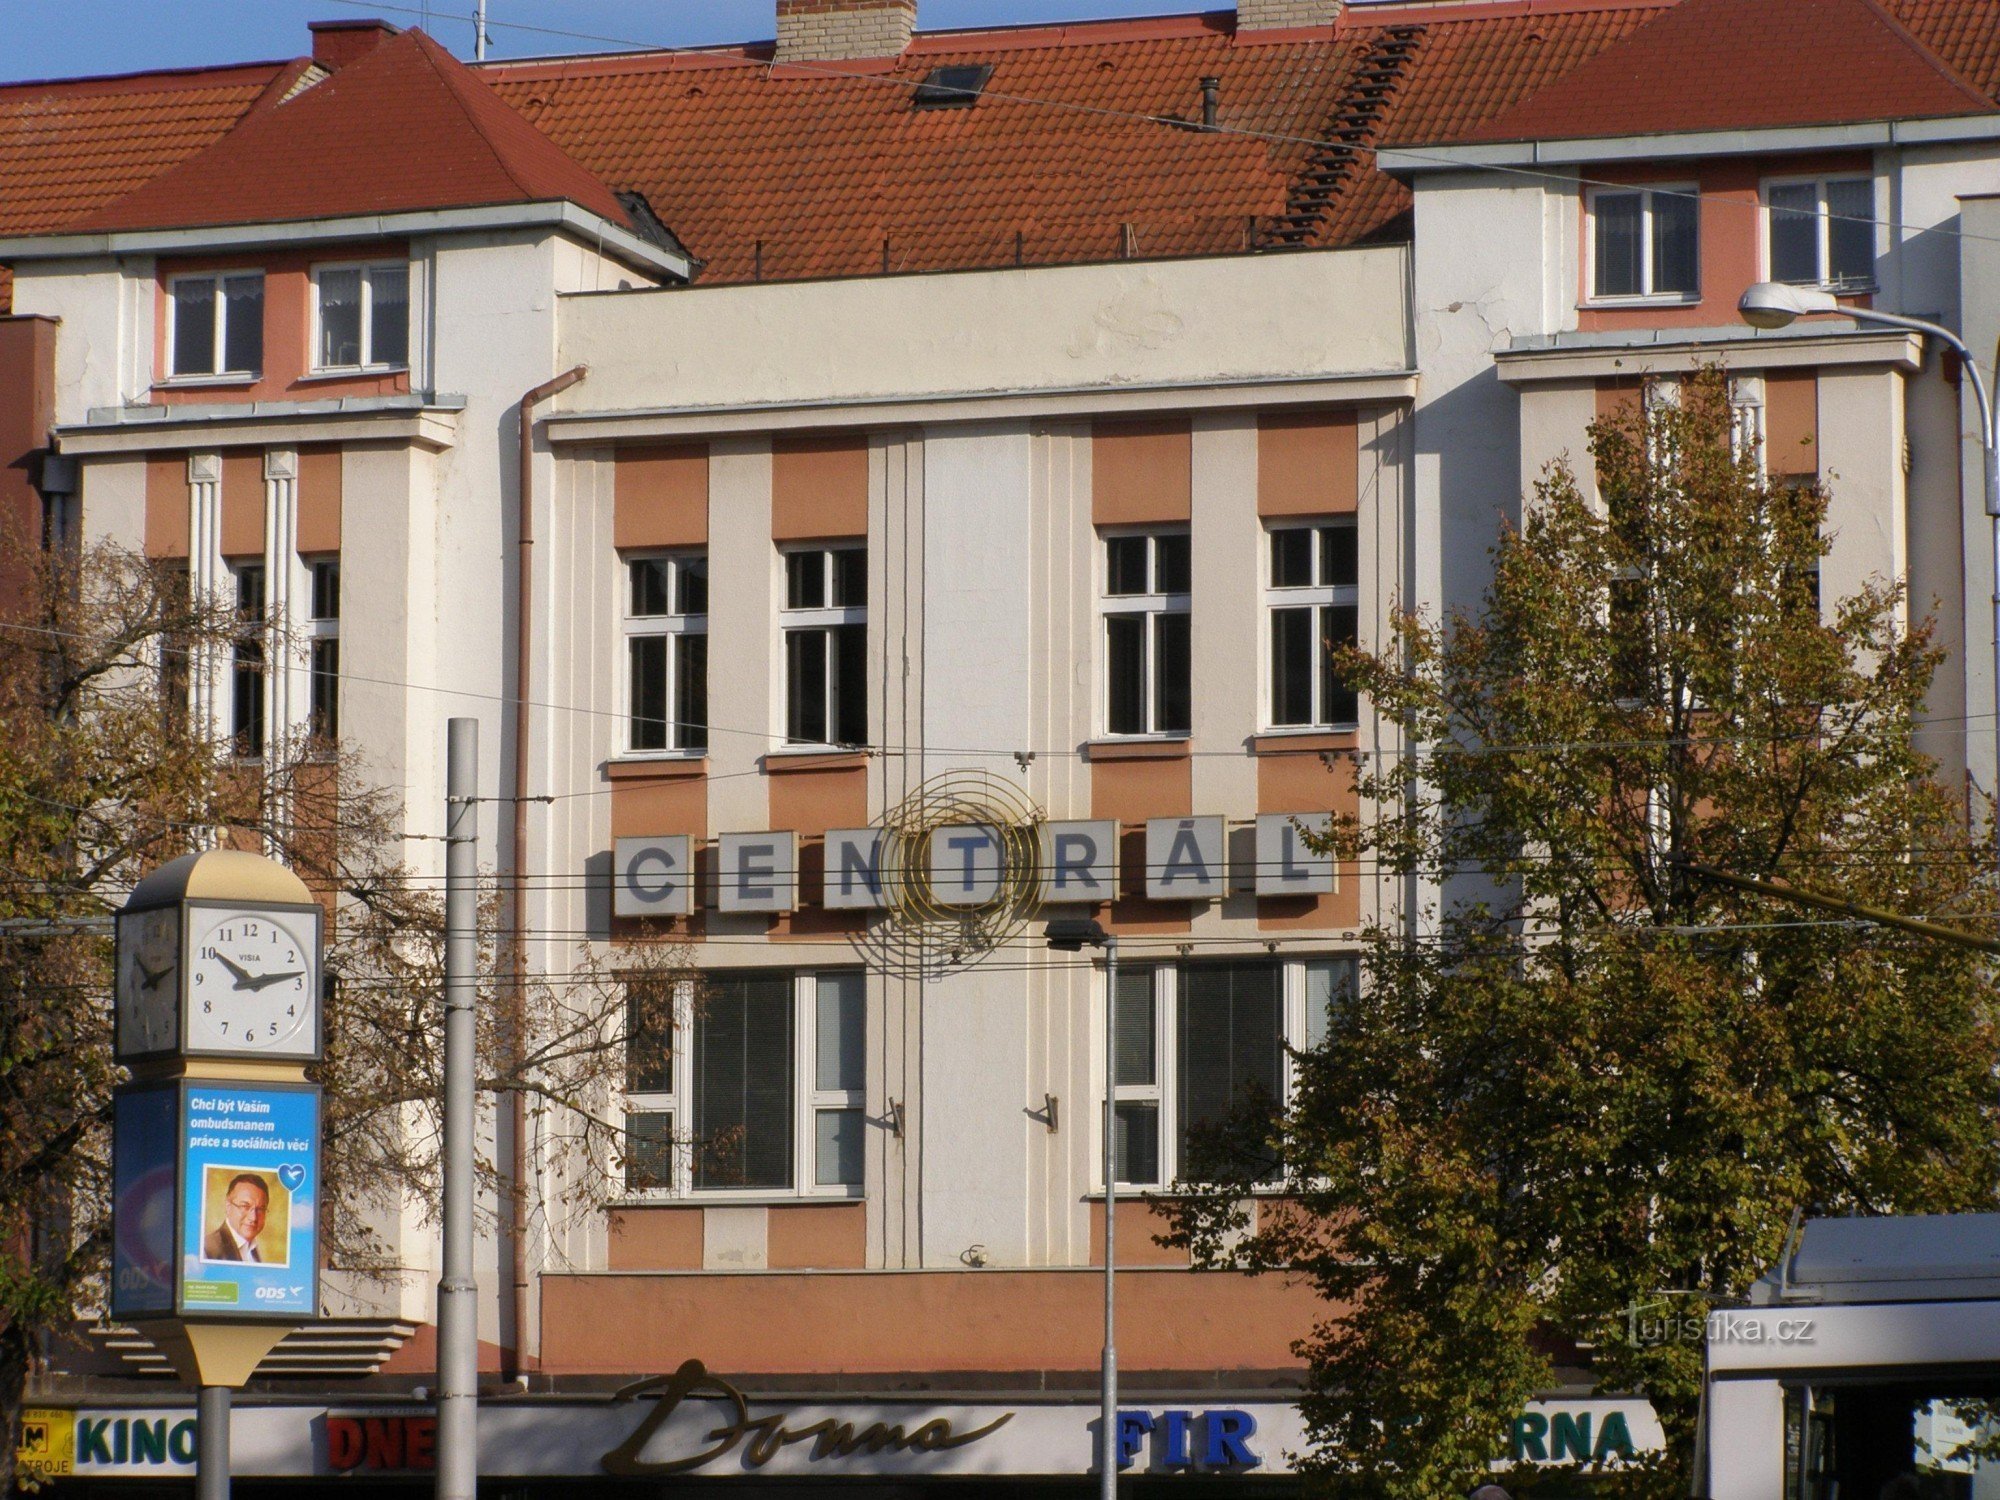 Hradec Králové - 中央电影院